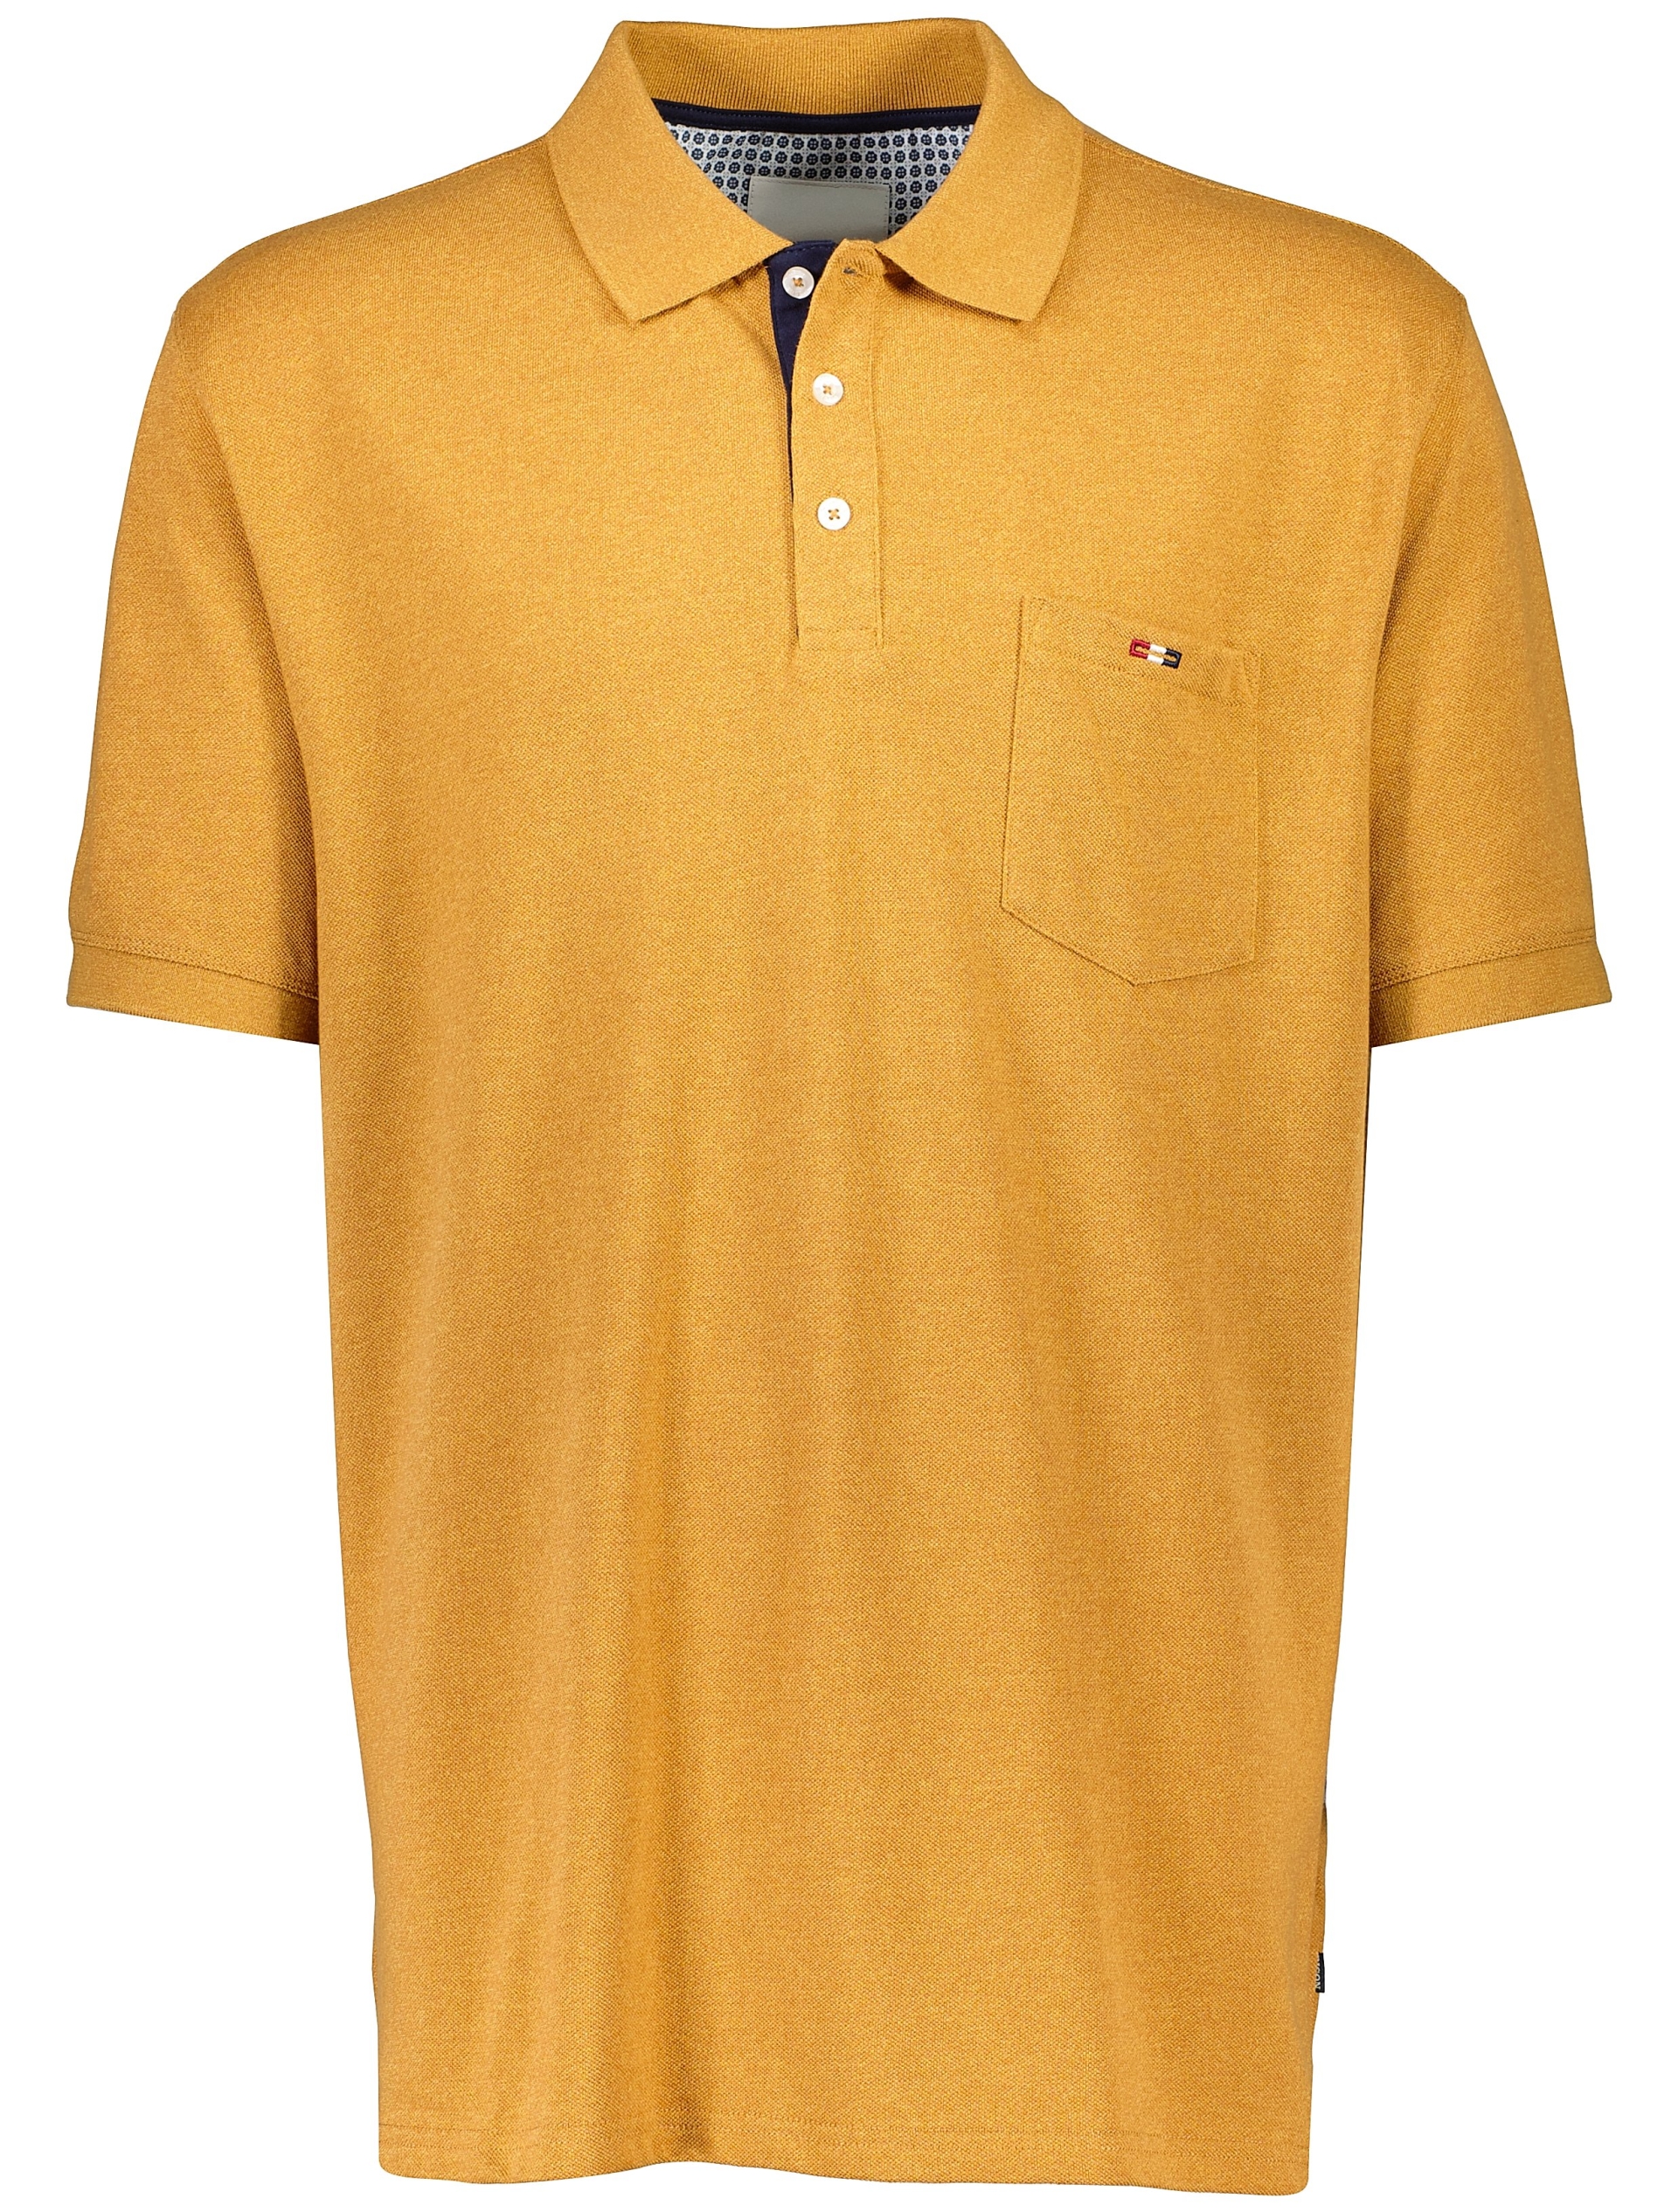 Bison Poloshirt gul / dk yellow 223